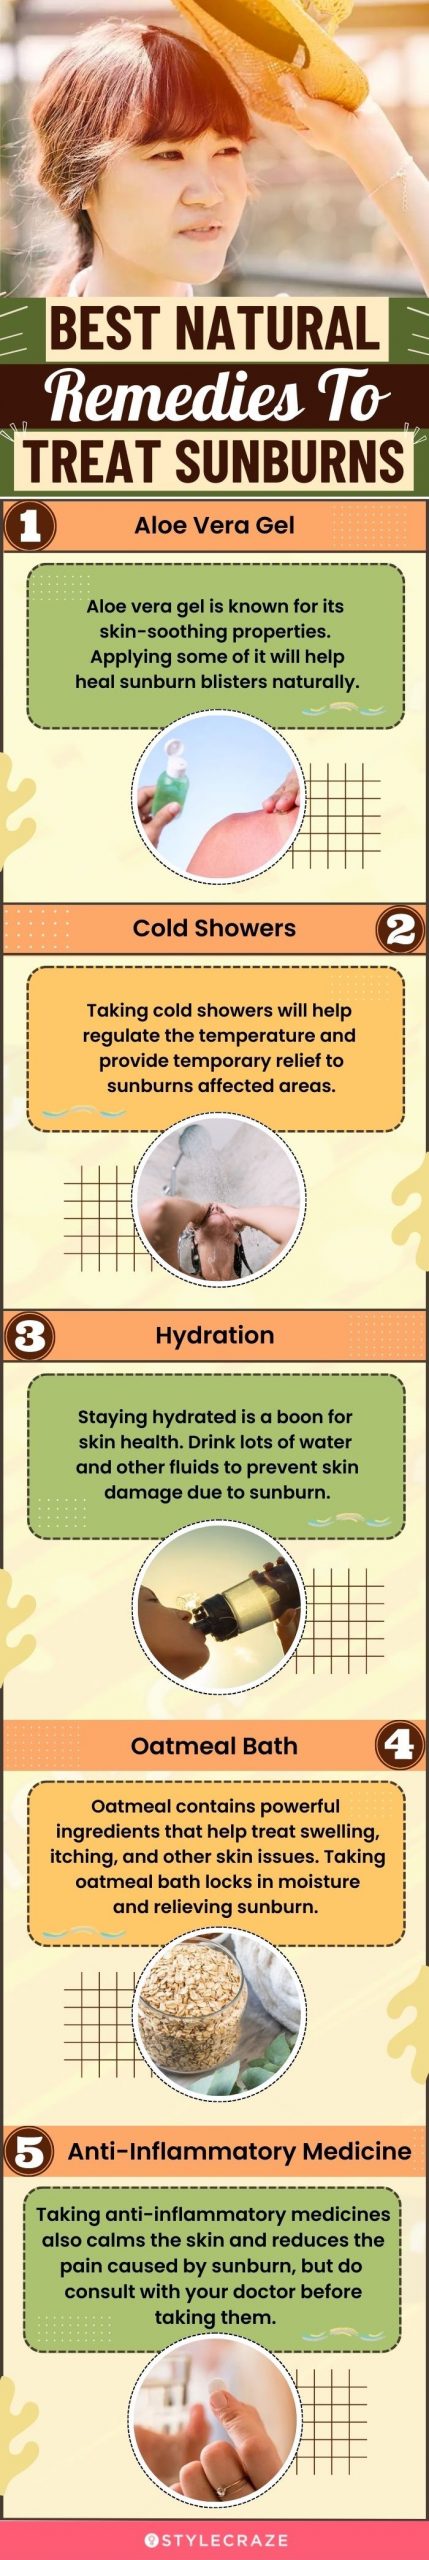 best natural remedies to treat sunburn (infographic)